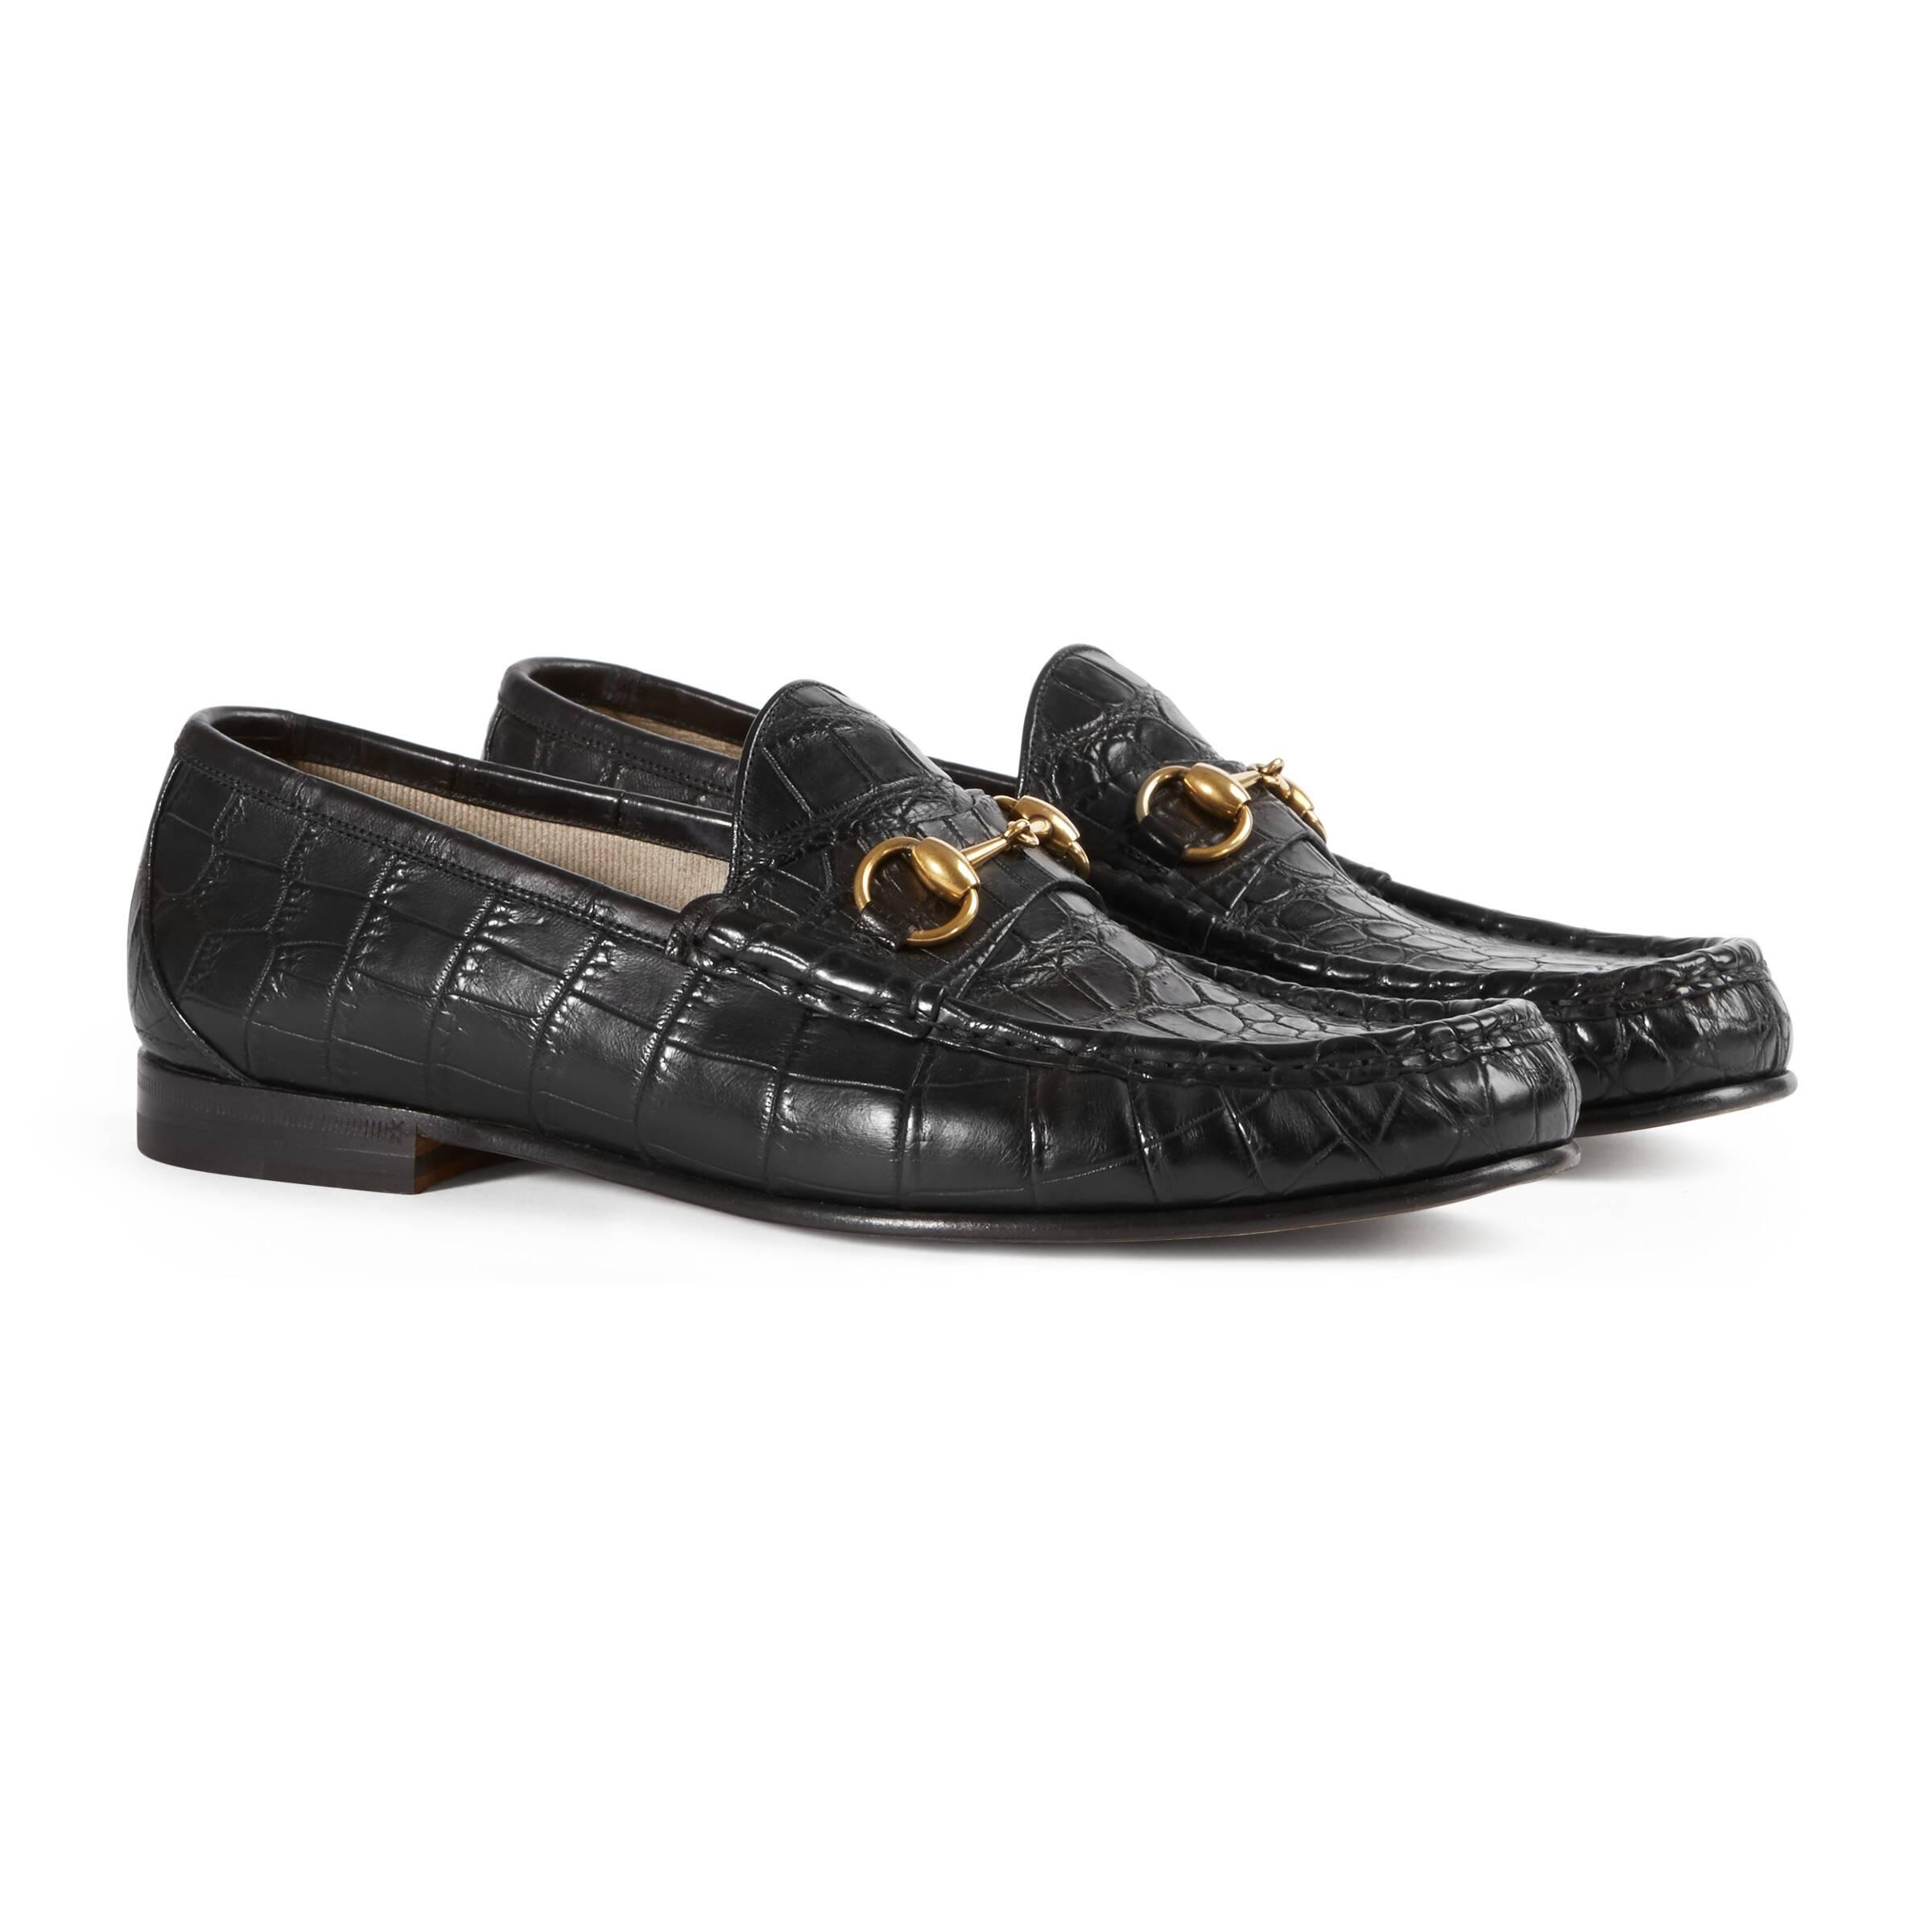 Gucci Leather 1953 Horsebit Crocodile Loafer in Black for Men - Lyst